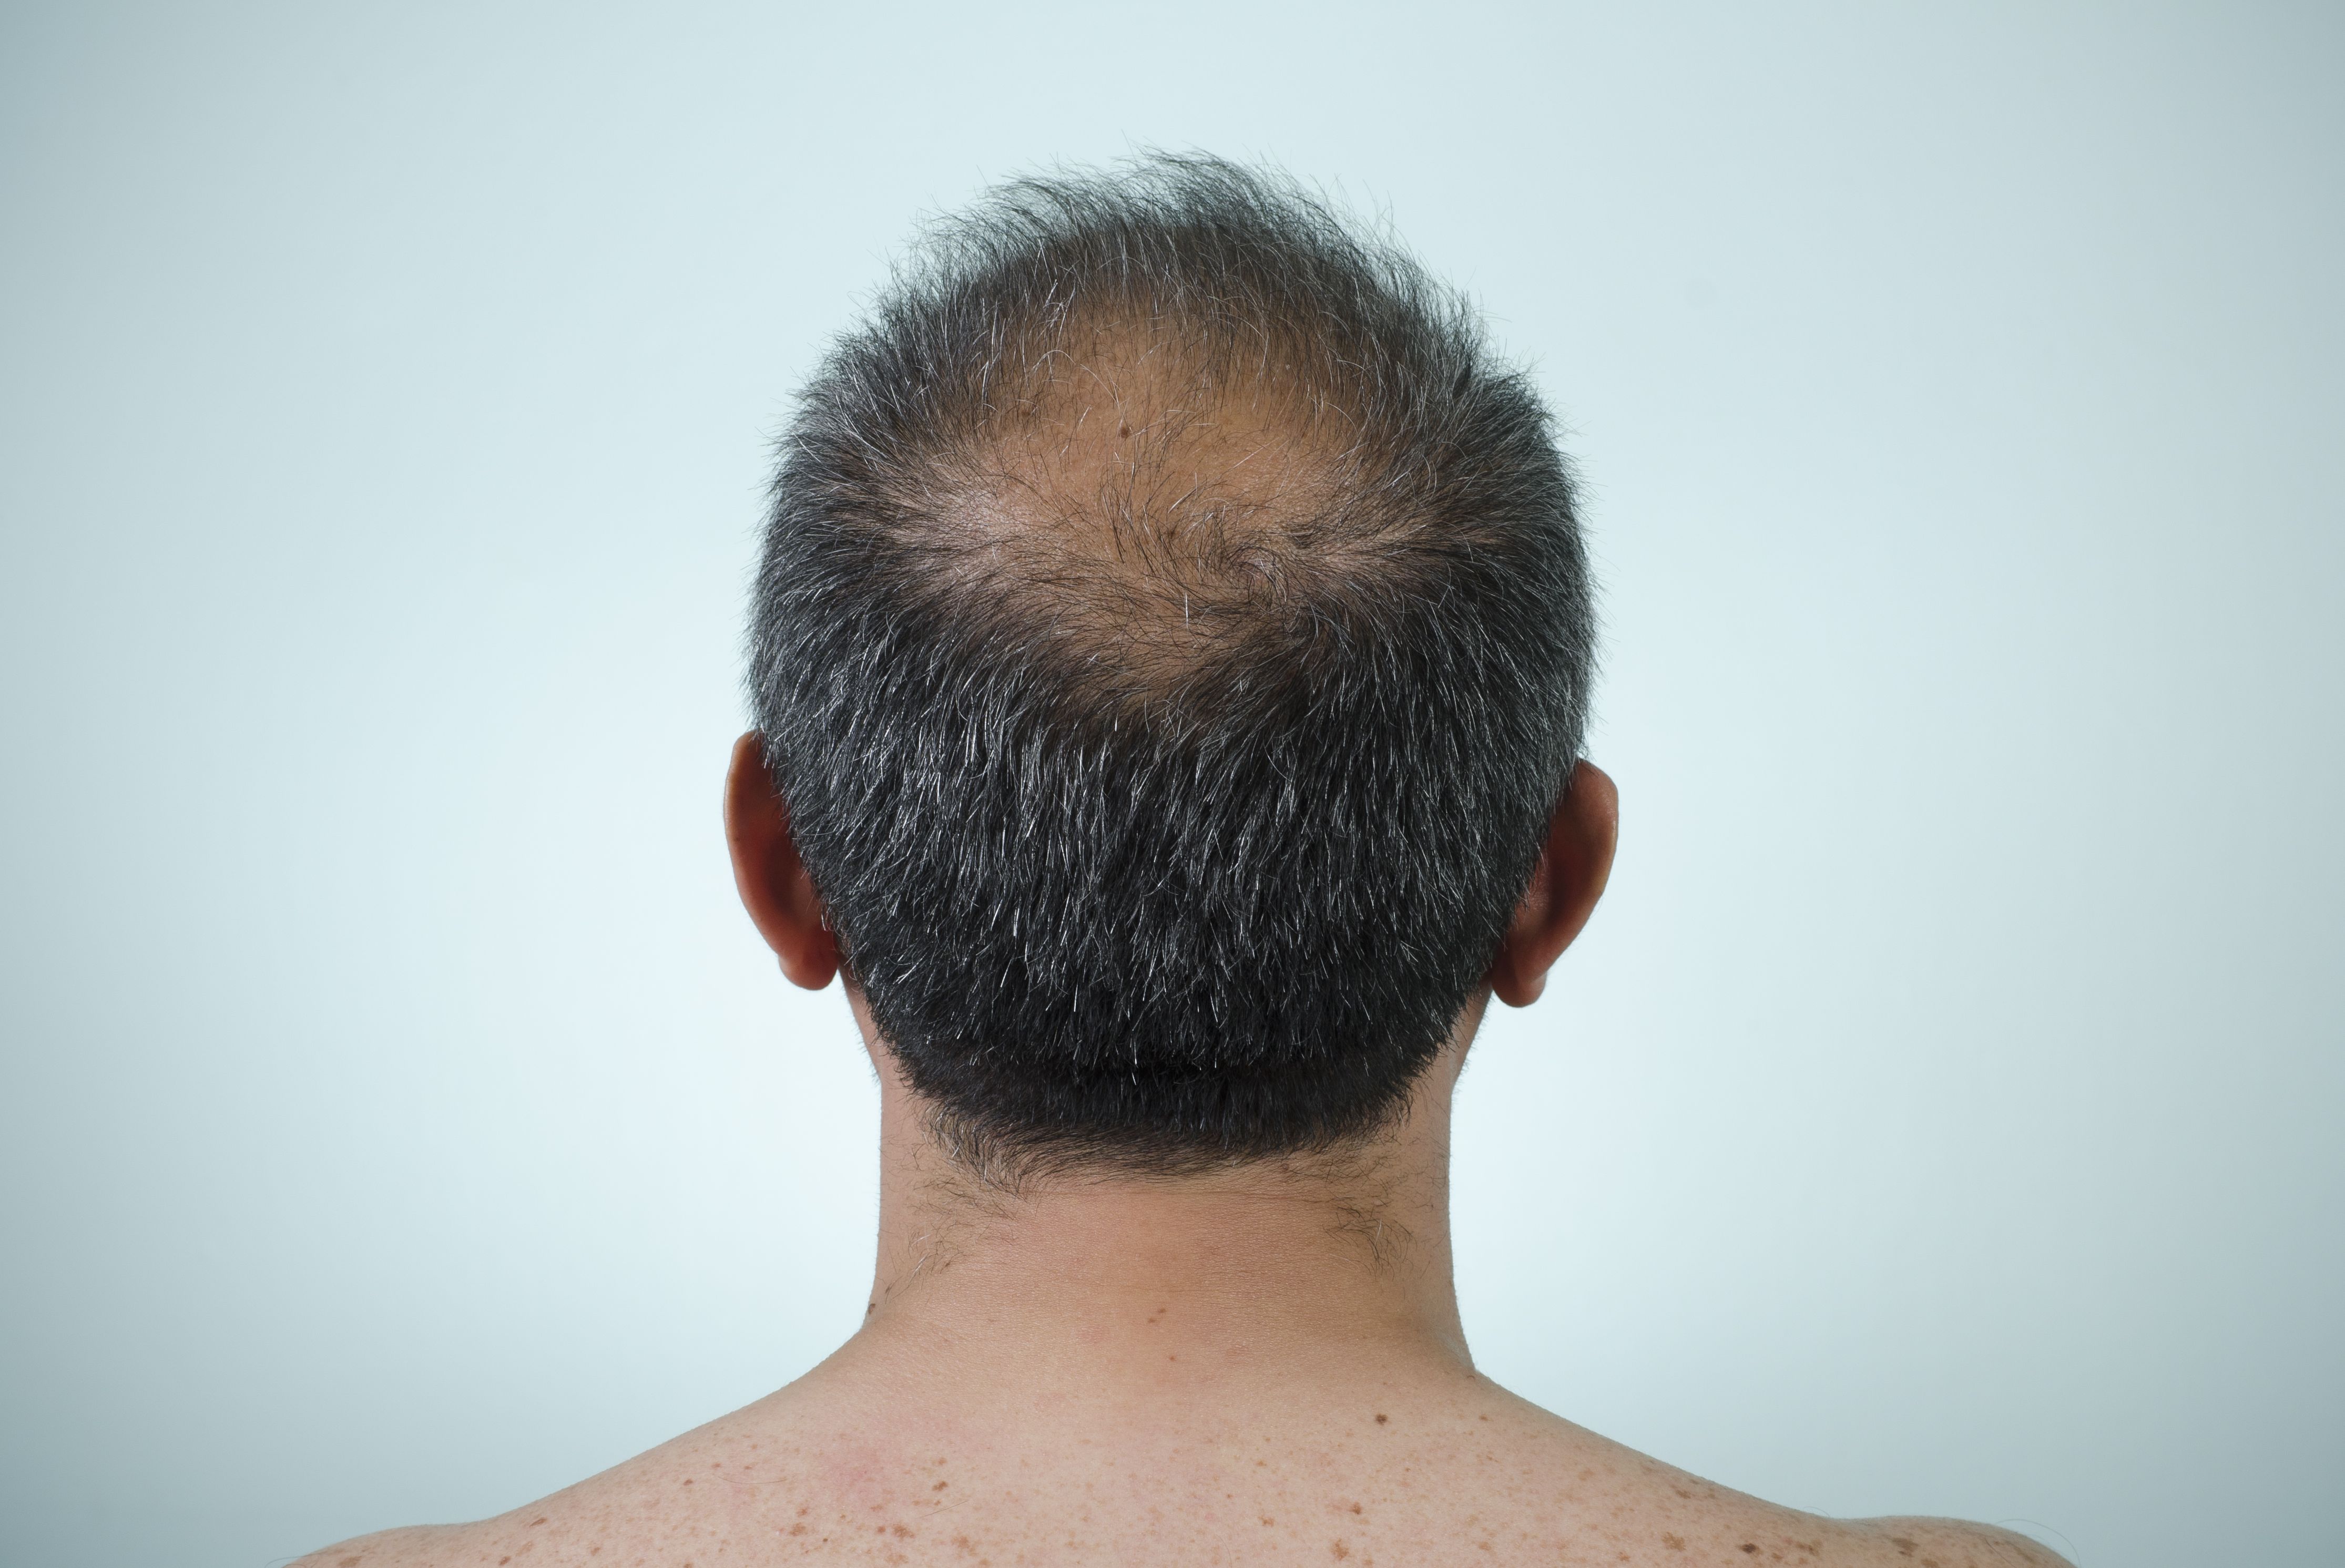 crown of head hair loss